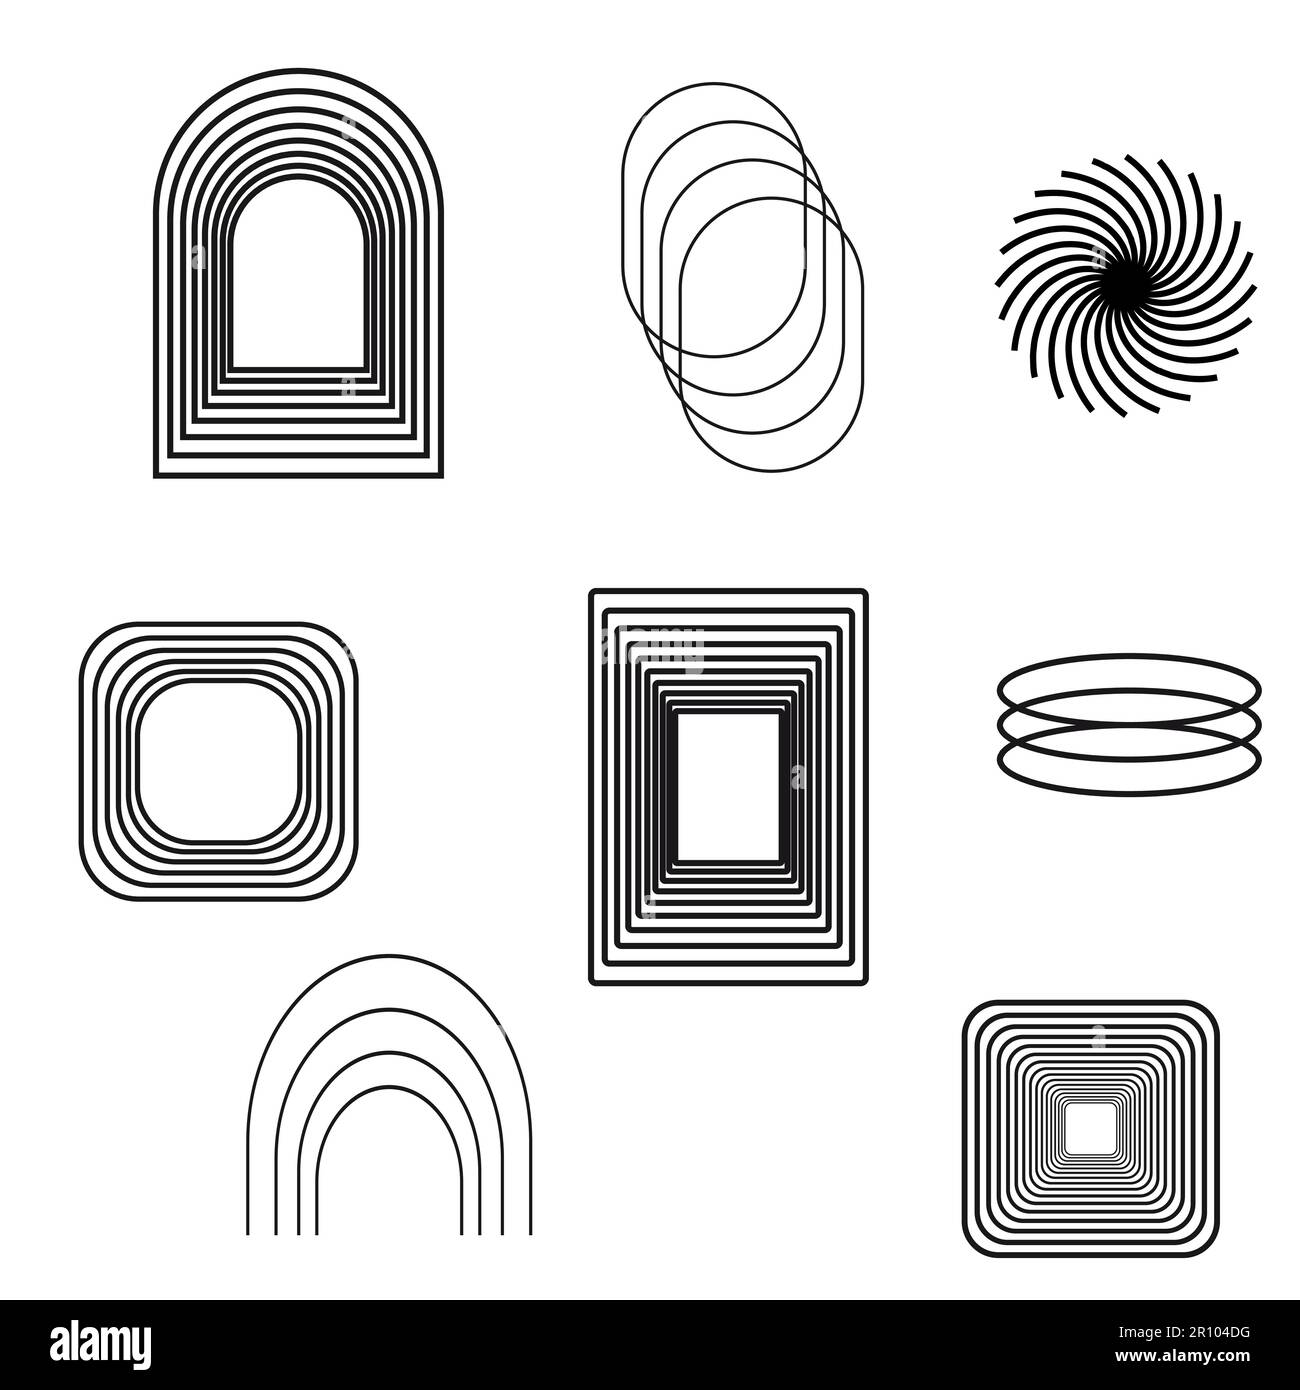 Swiss bauhaus Y2K elementi brutalistici. Forme geometriche astratte, figure contemporanee. Design Vector memphis, set di elementi primitivi Illustrazione Vettoriale